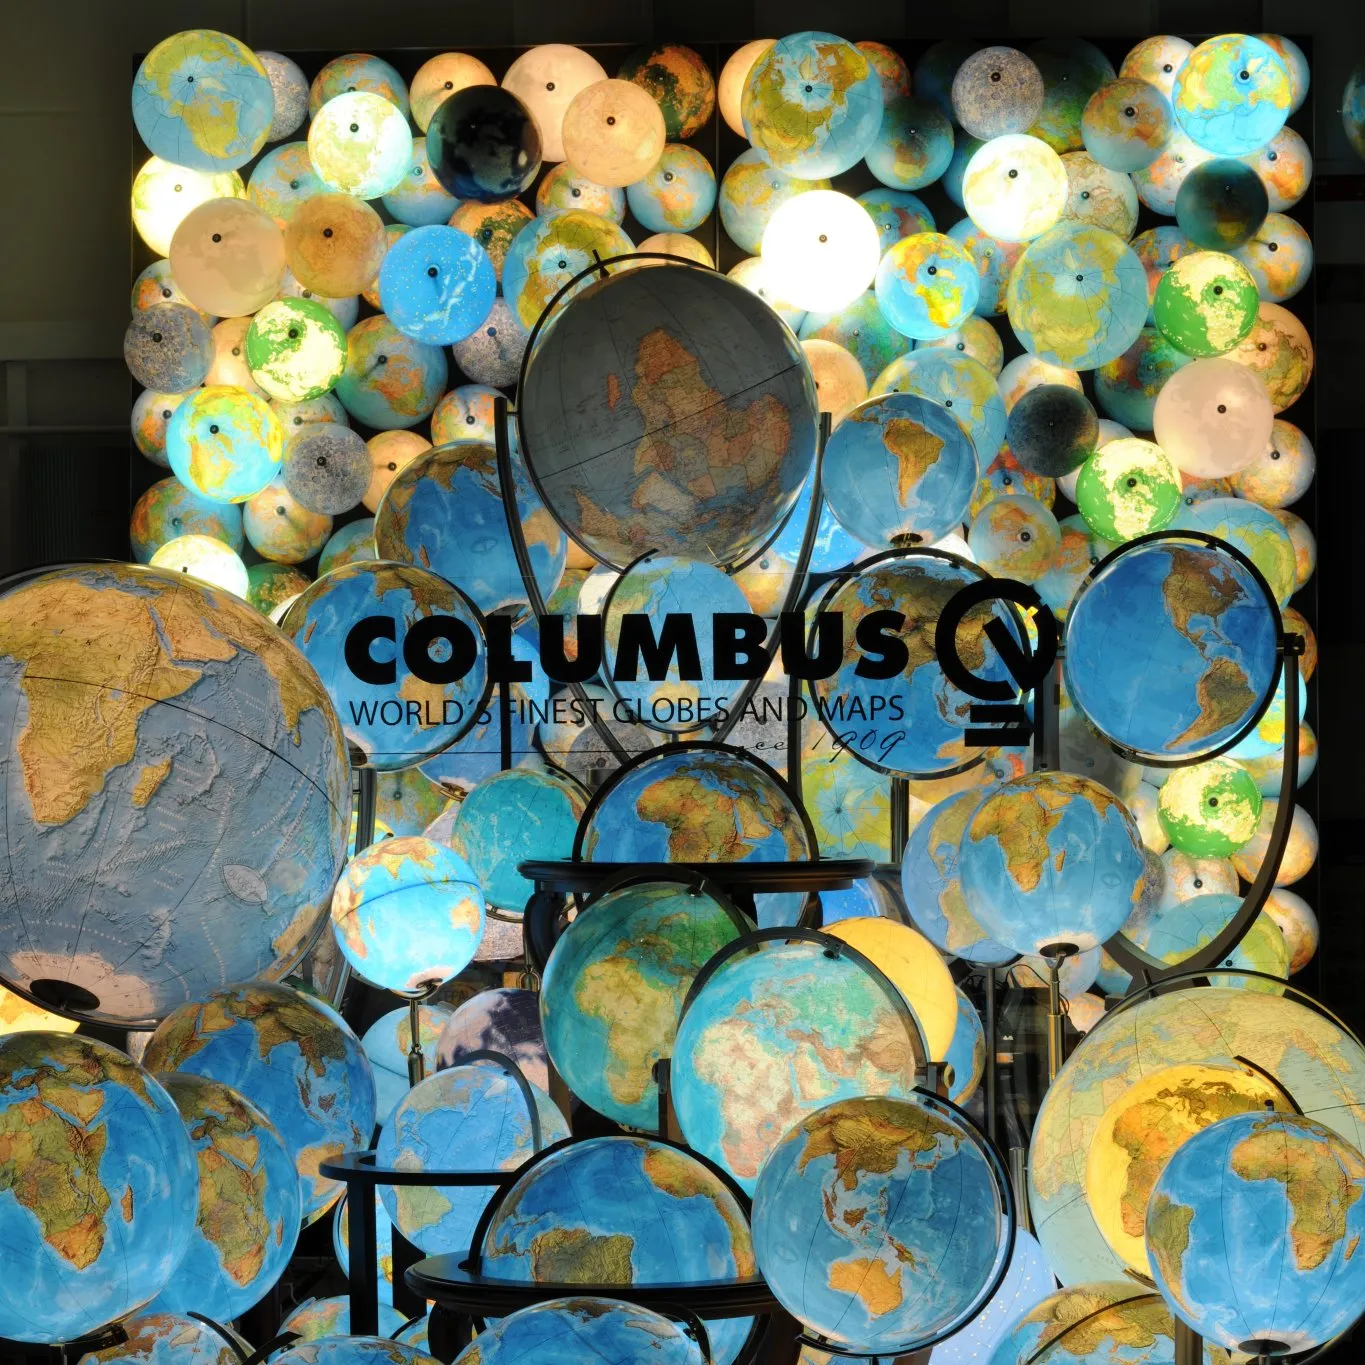 columbus-globus-shop.de